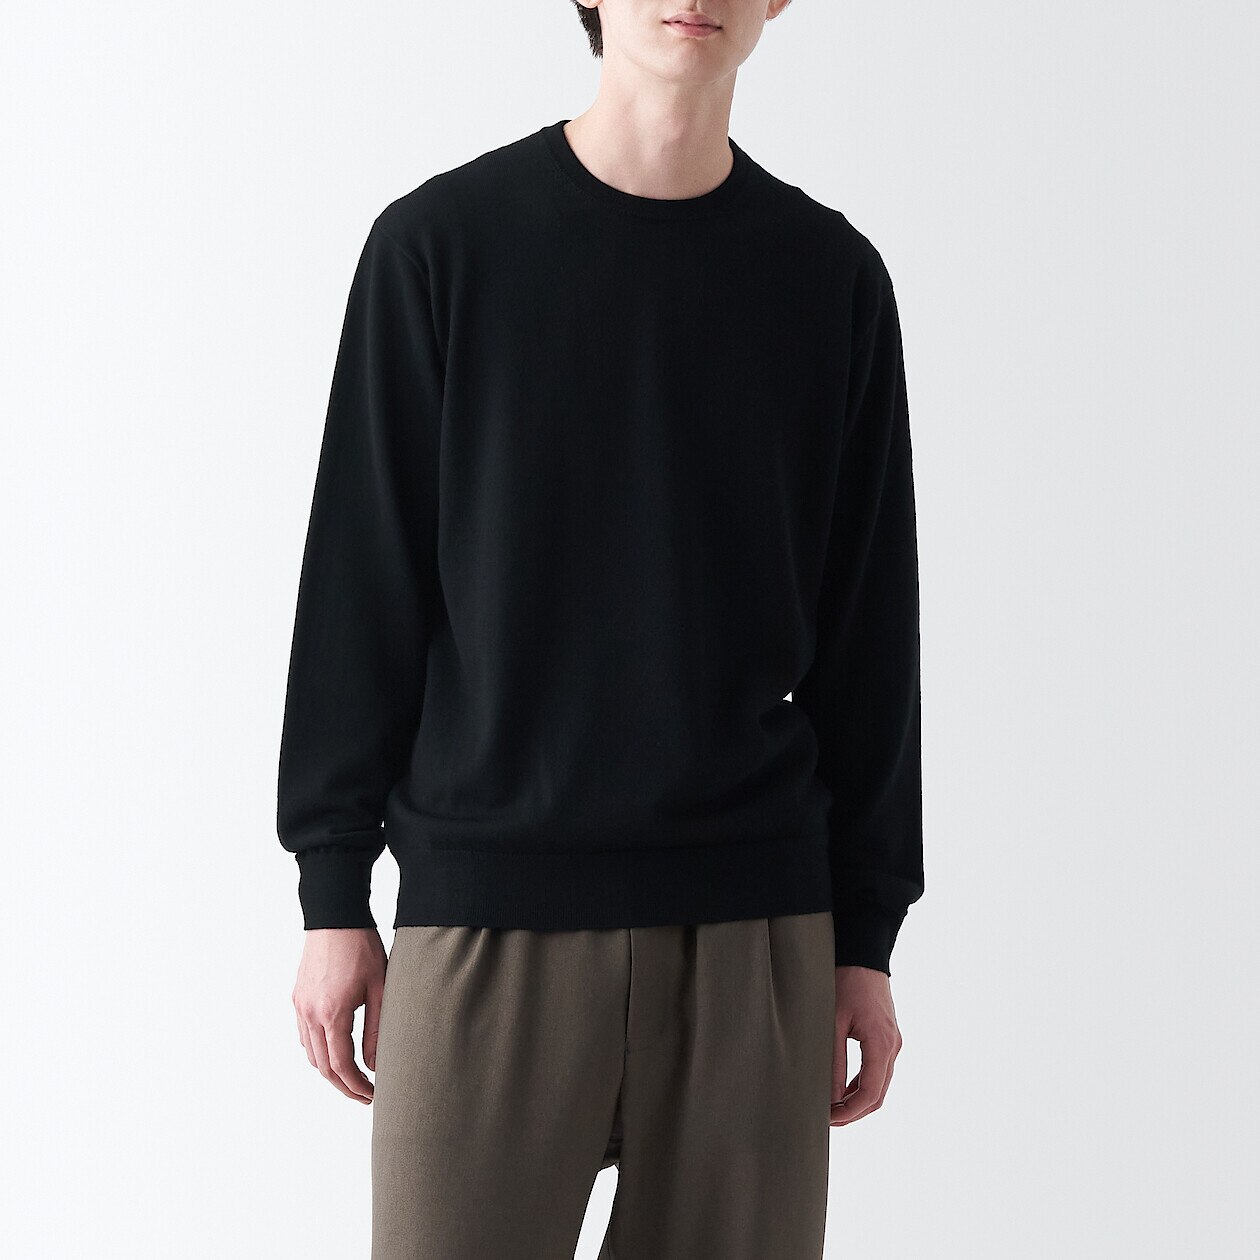 Shop Washable High-Gauge Crew Neck Sweater online | Muji UAE